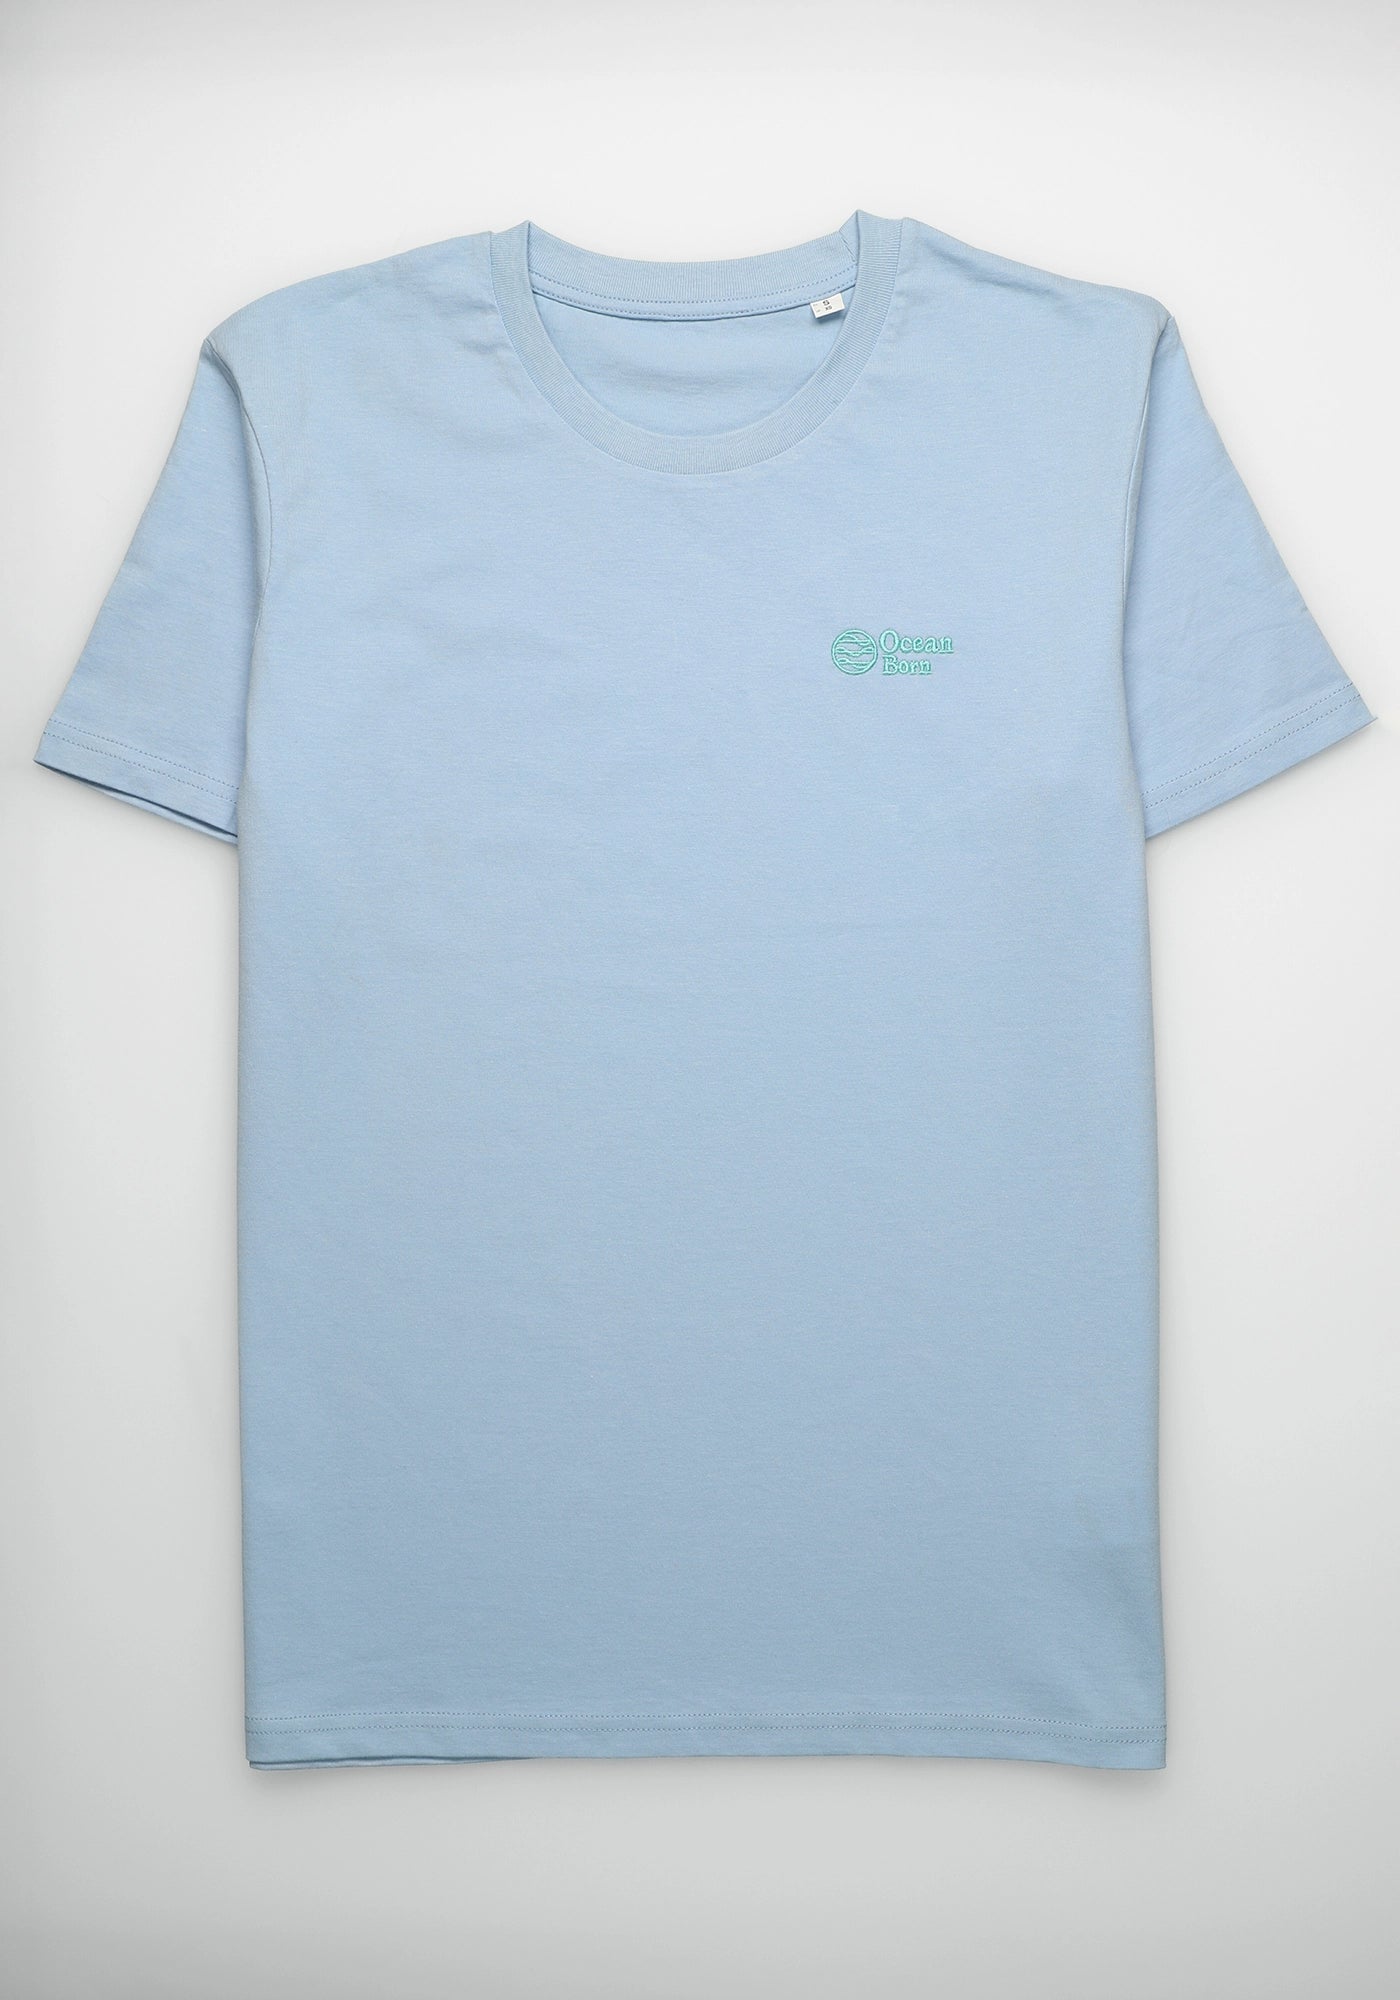 Everyday Ocean T-Shirt